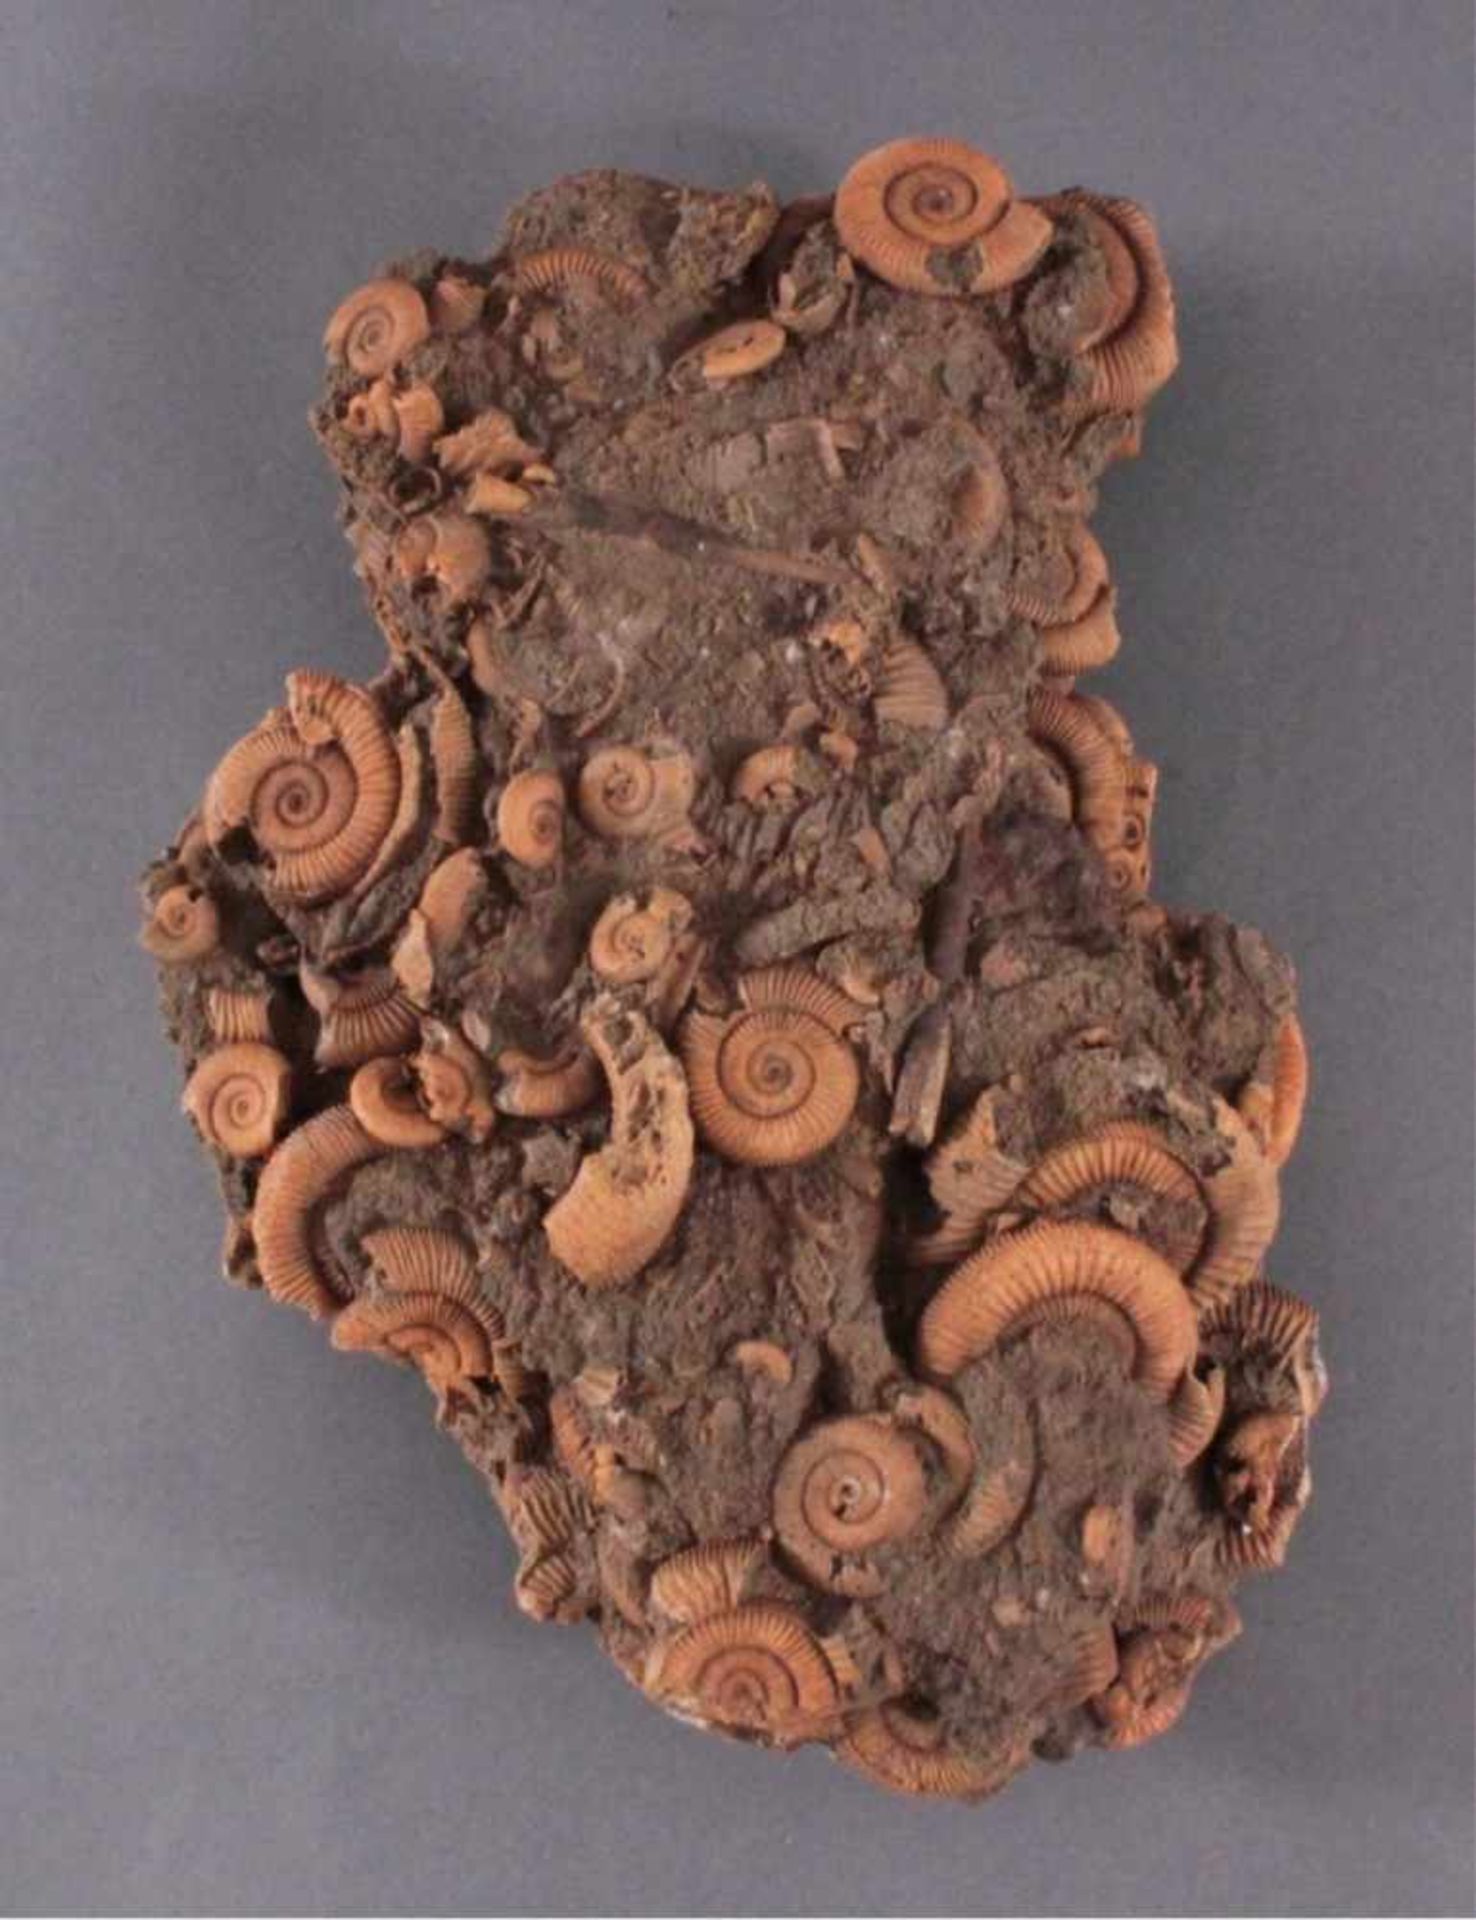 Großes Fossil mit AmonitenActylioceras athleticum Ammonit Fossilien-Brocken,ca. 10 x 35 x 24 cm, 7,